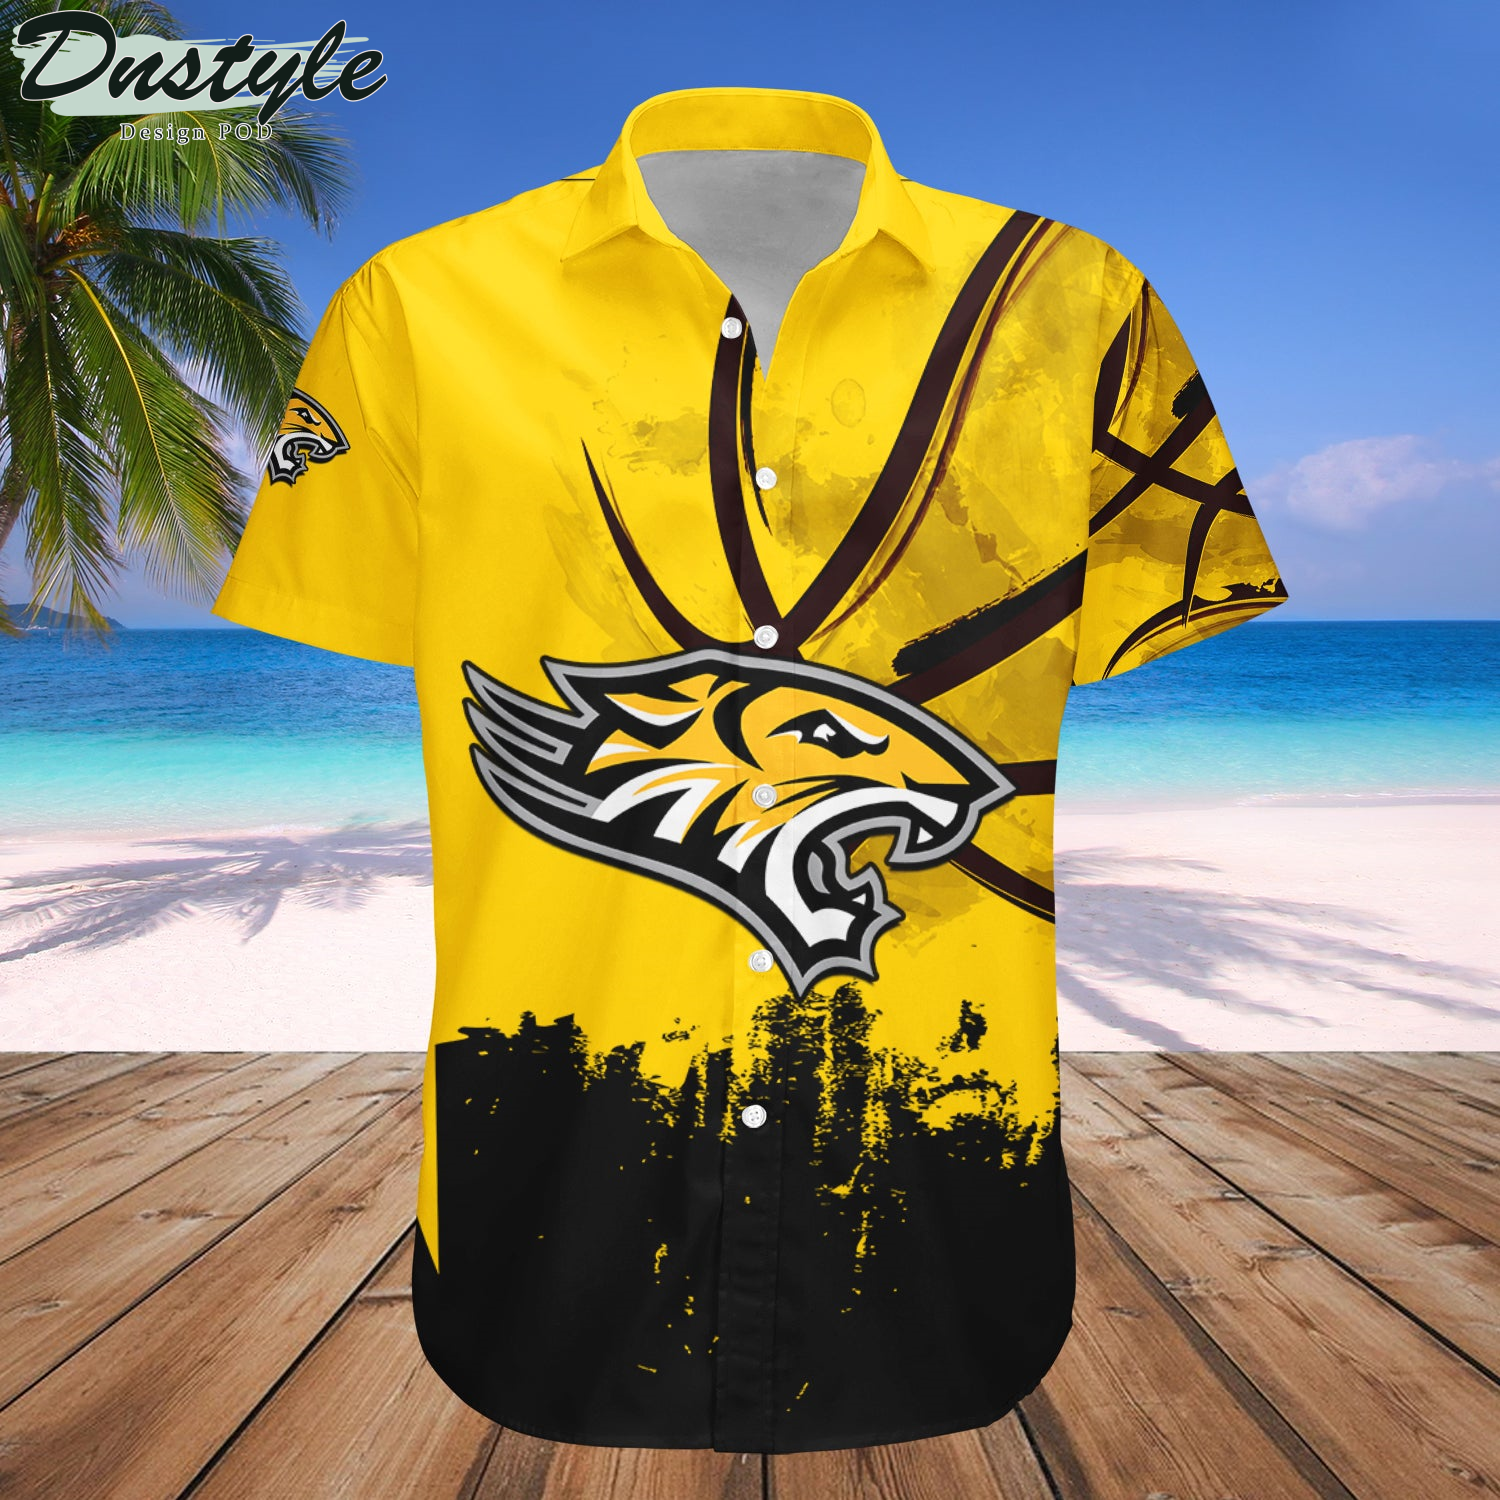 Towson Tigers Basketball Net Grunge Pattern Hawaii Shirt